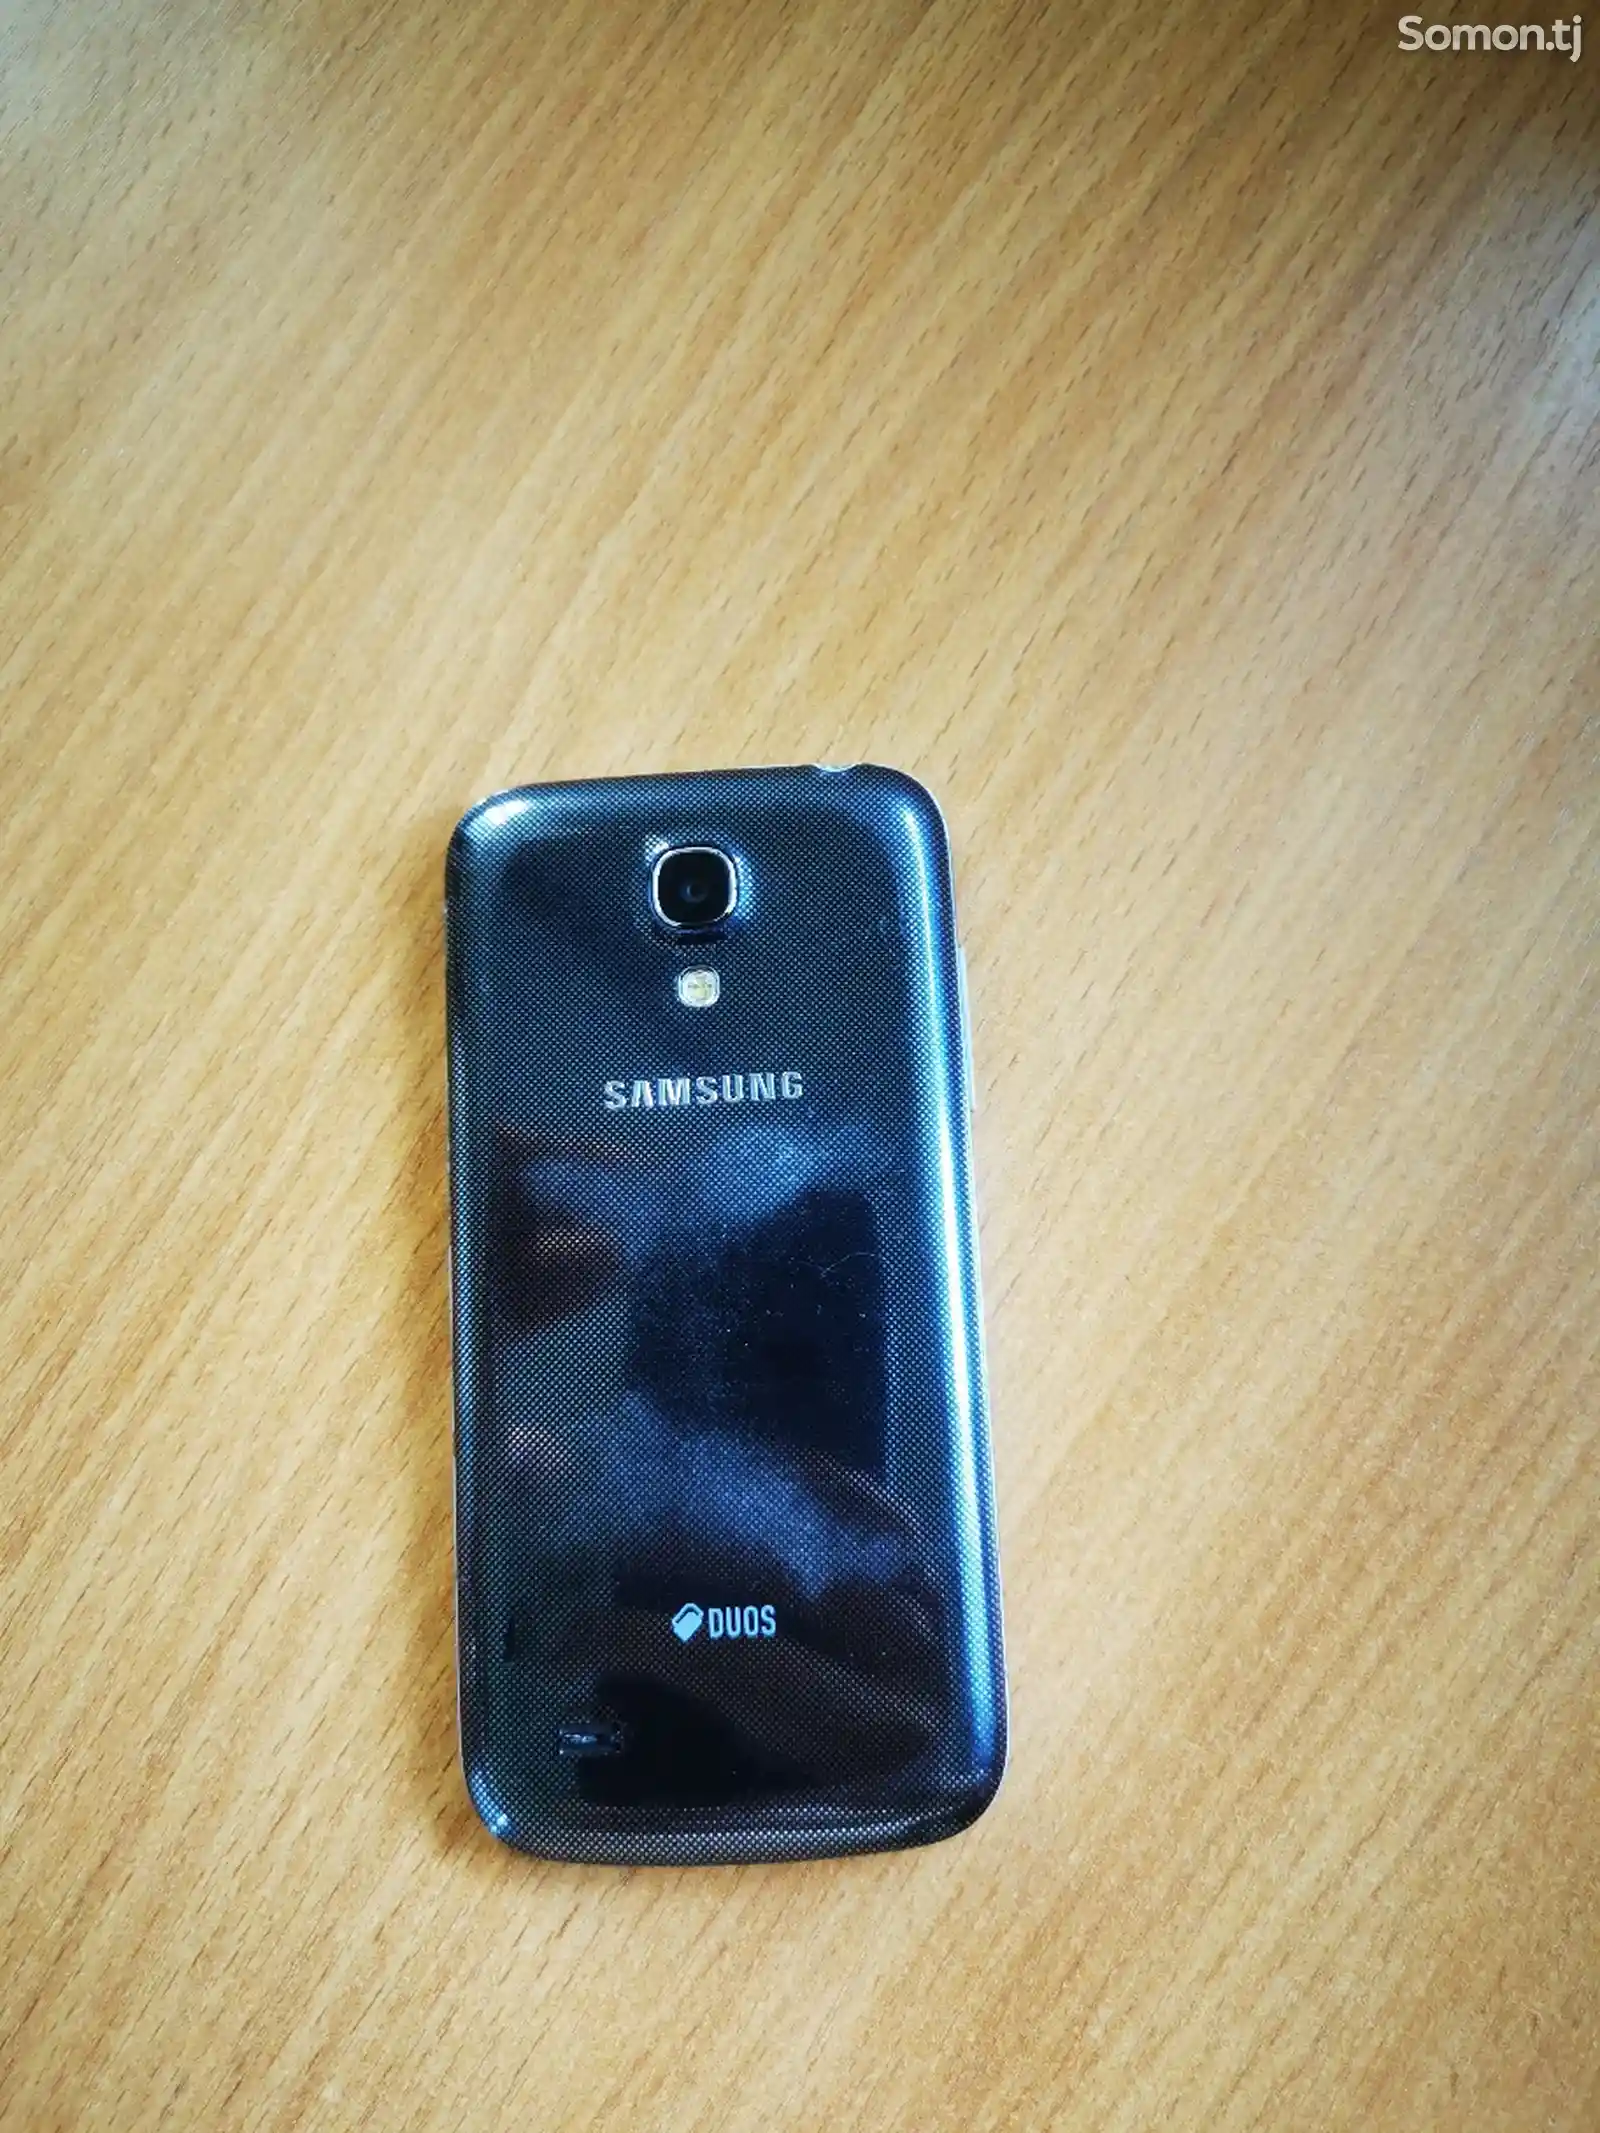 Samsung Galaxy S4 mini-1